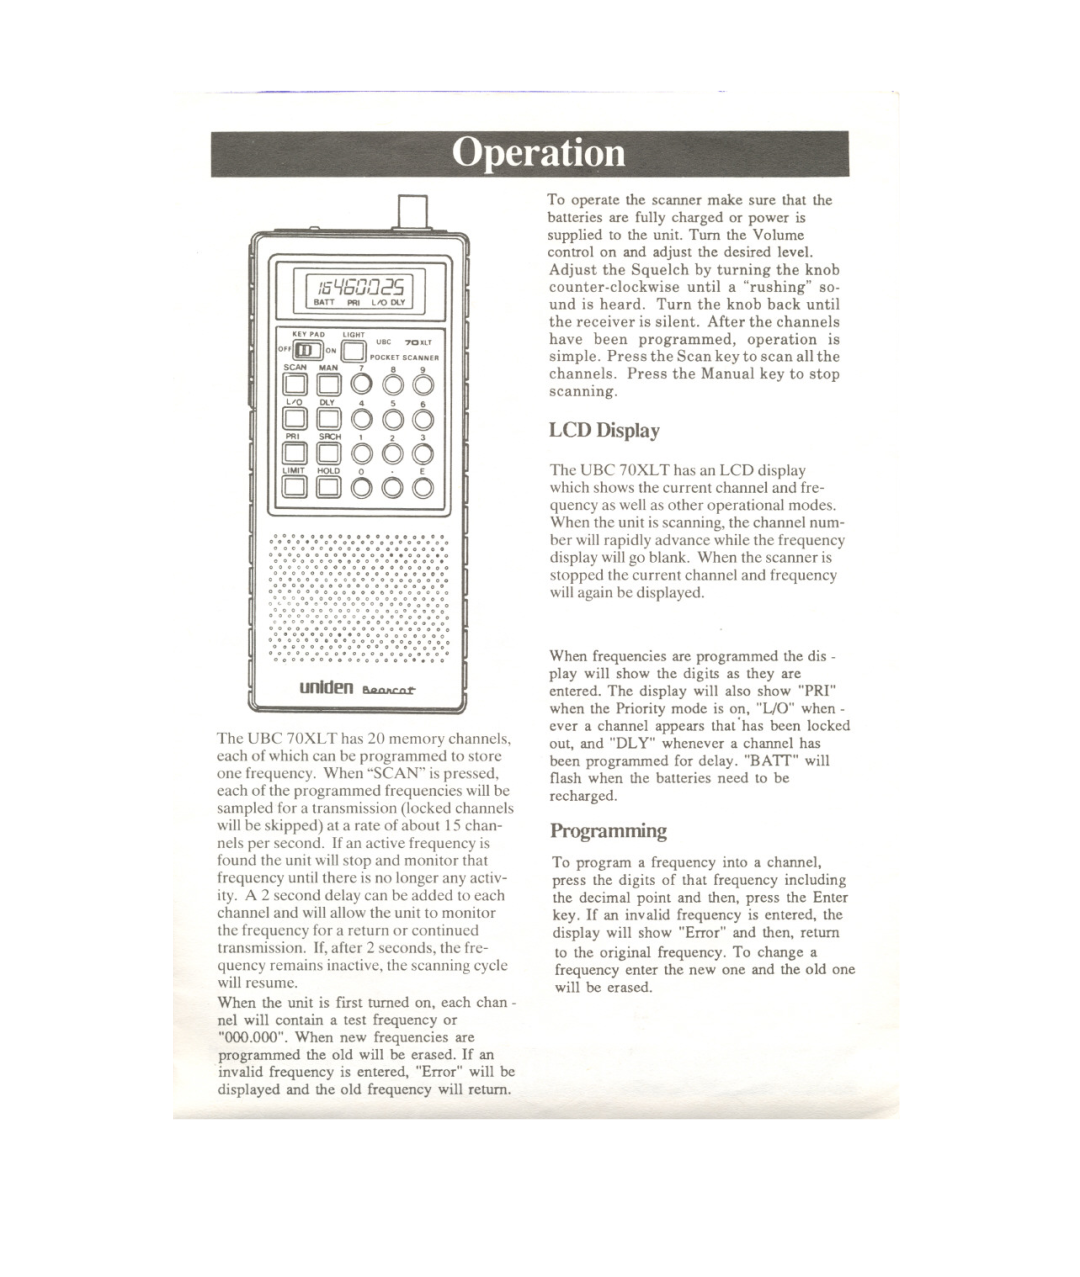 Uniden UBC 70XLT manual OperatiQll, LCD Display, 00000, 5-160025, unlden 